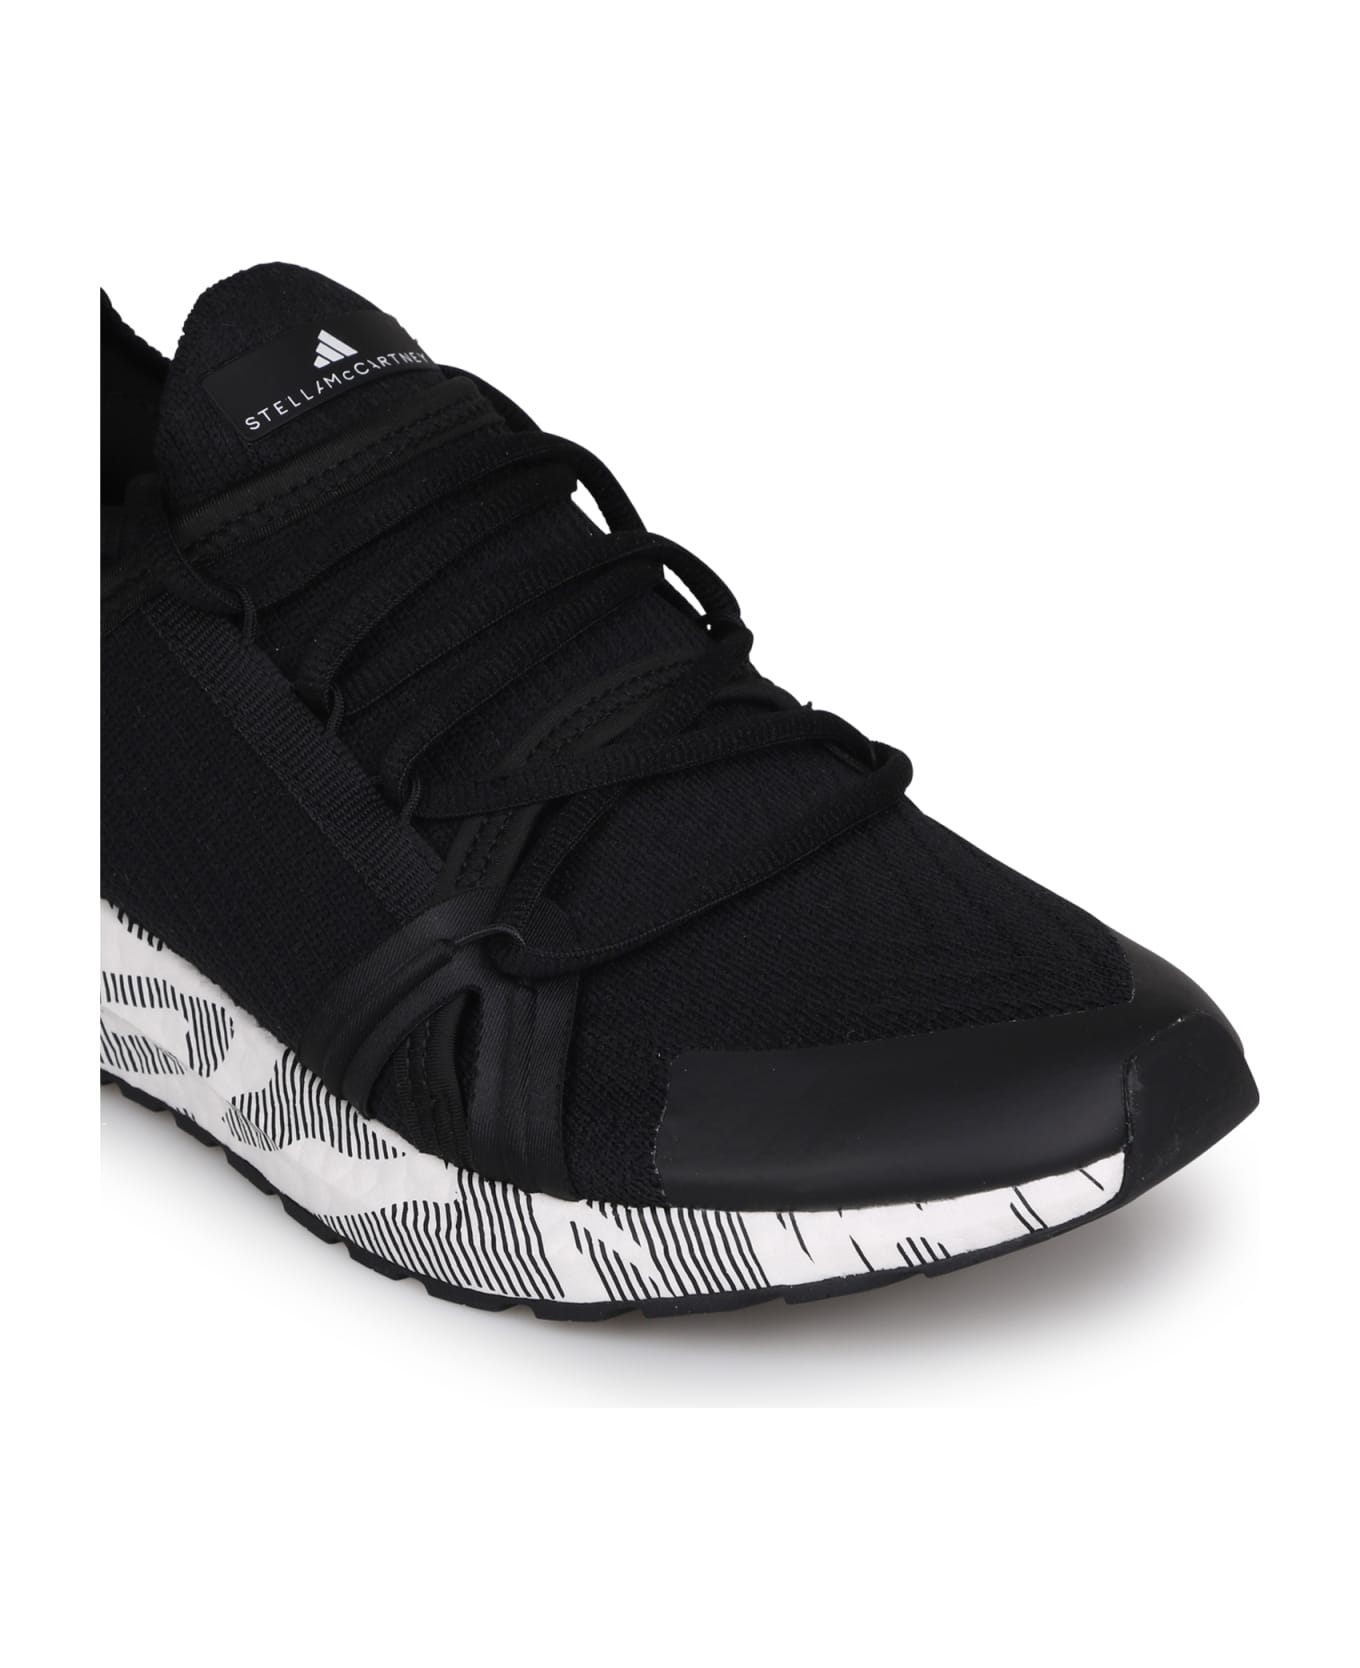 Adidas by Stella McCartney Ultraboost 20 Low-top Sneakers - Black